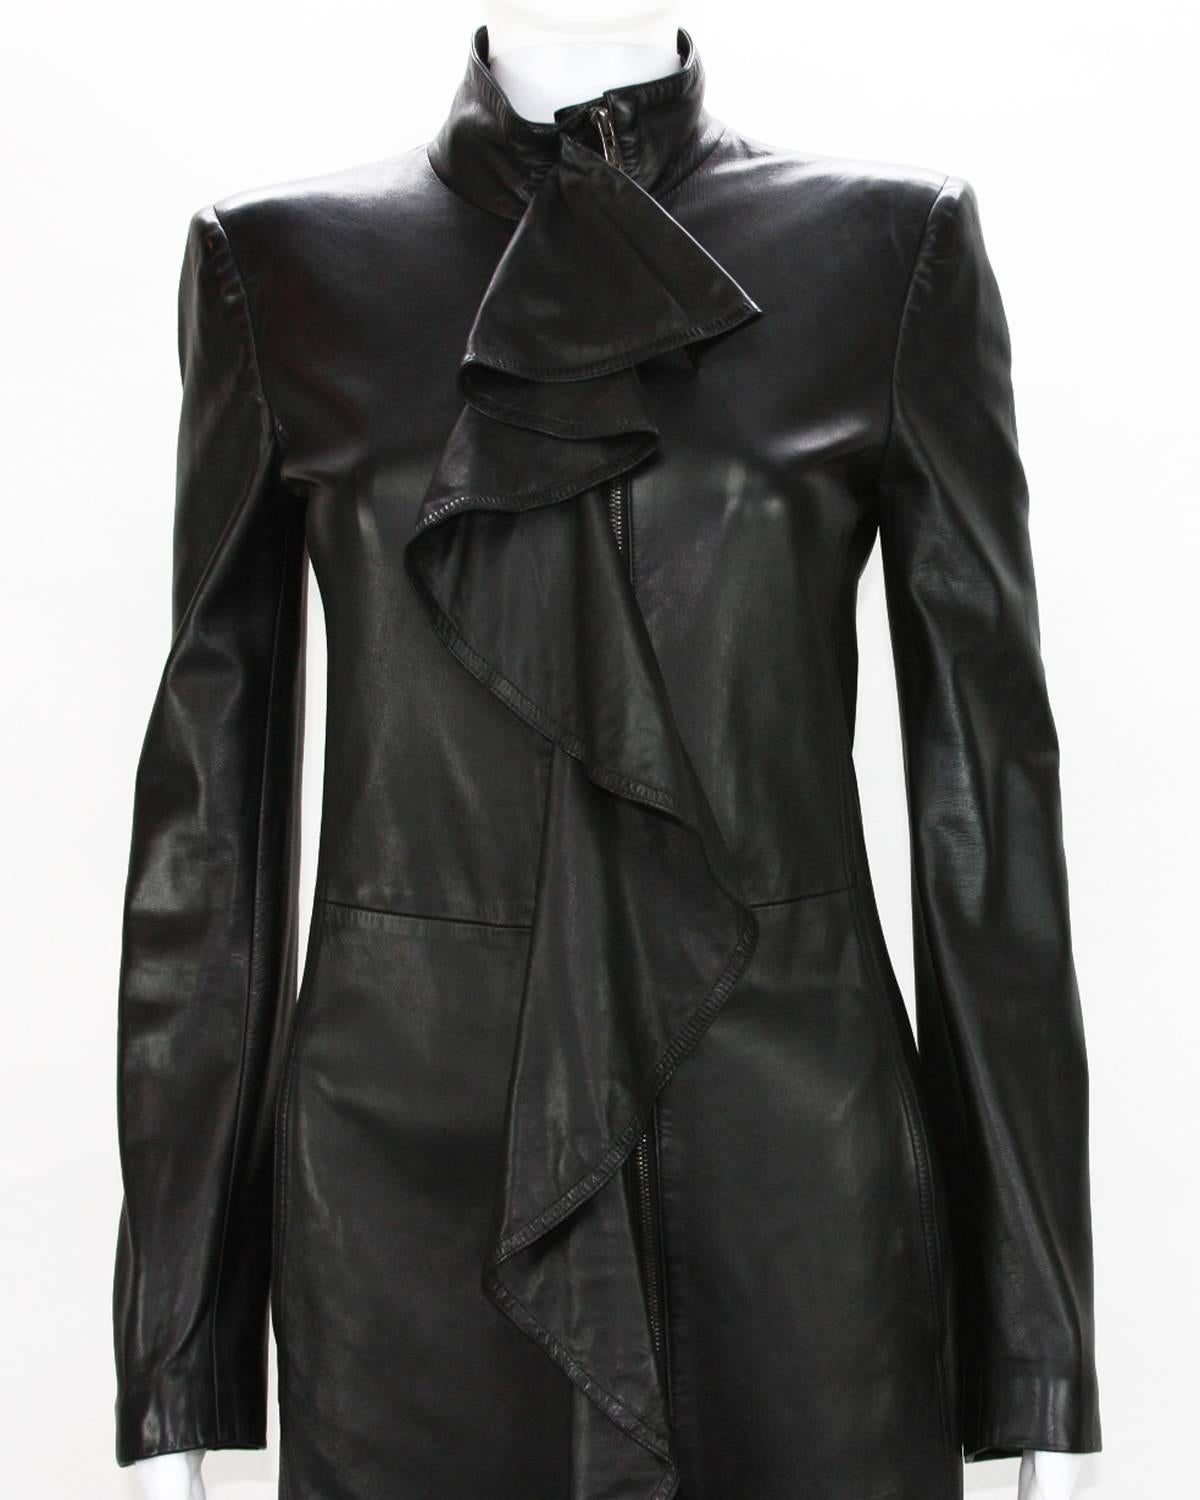 TOM FORD for YVES SAINT LAURENT F/W 2003 Black Leather Ruffle Coat Fr.36 US 4 3